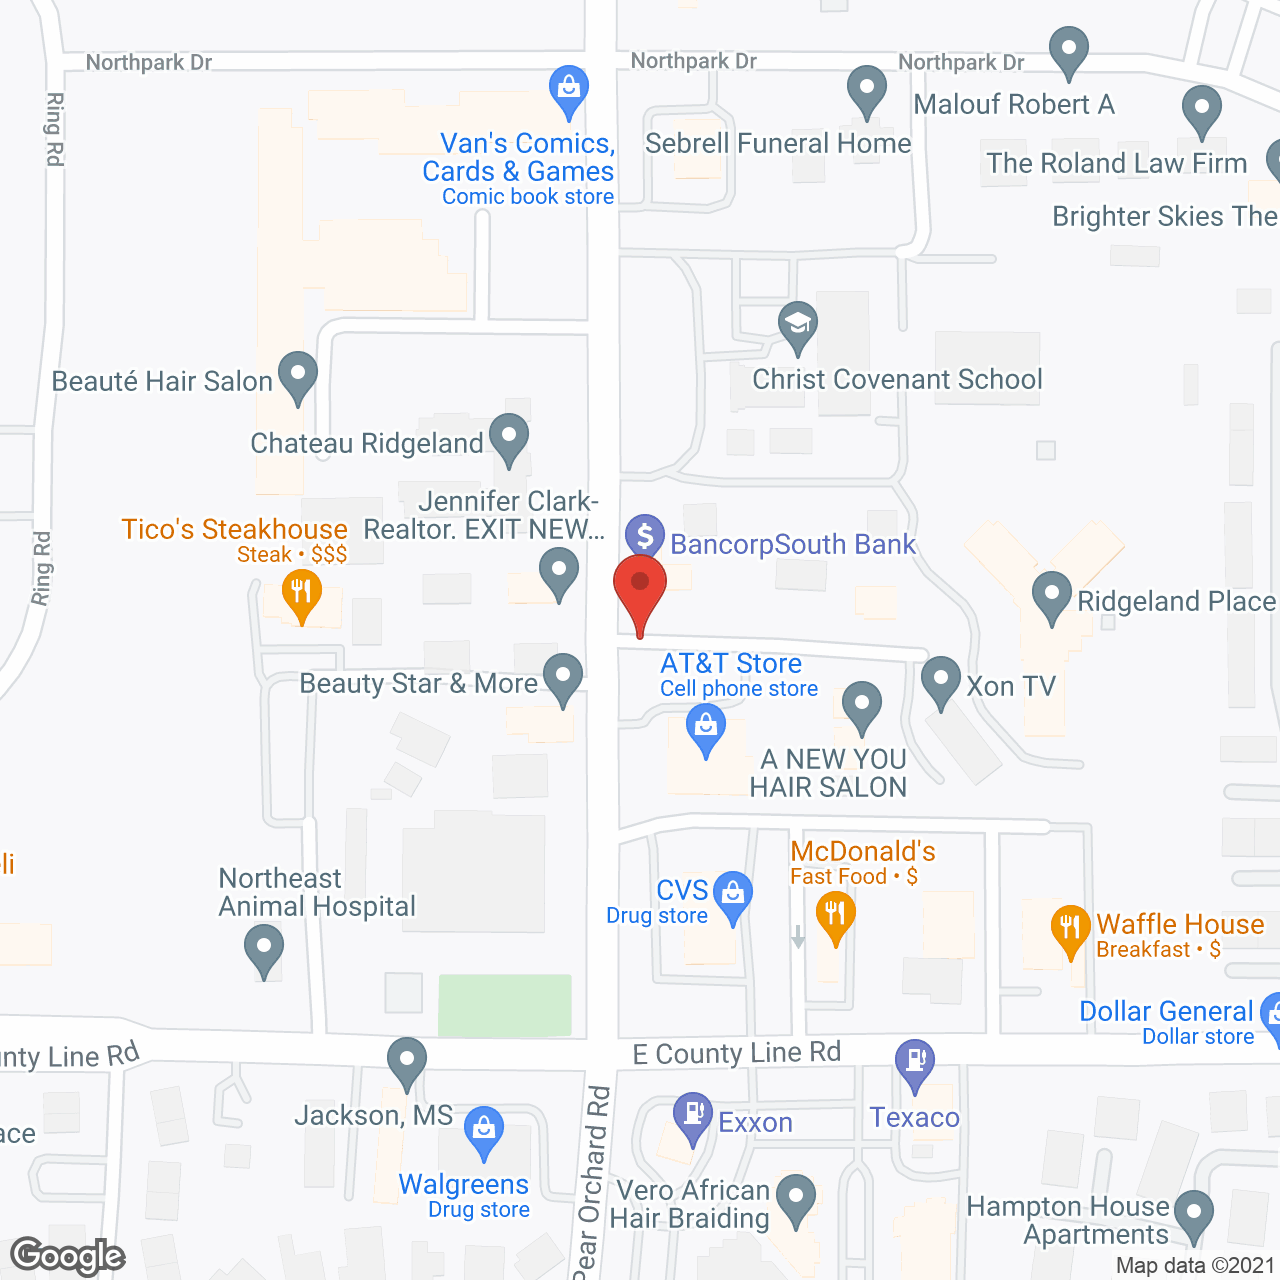 Ridgeland Place in google map